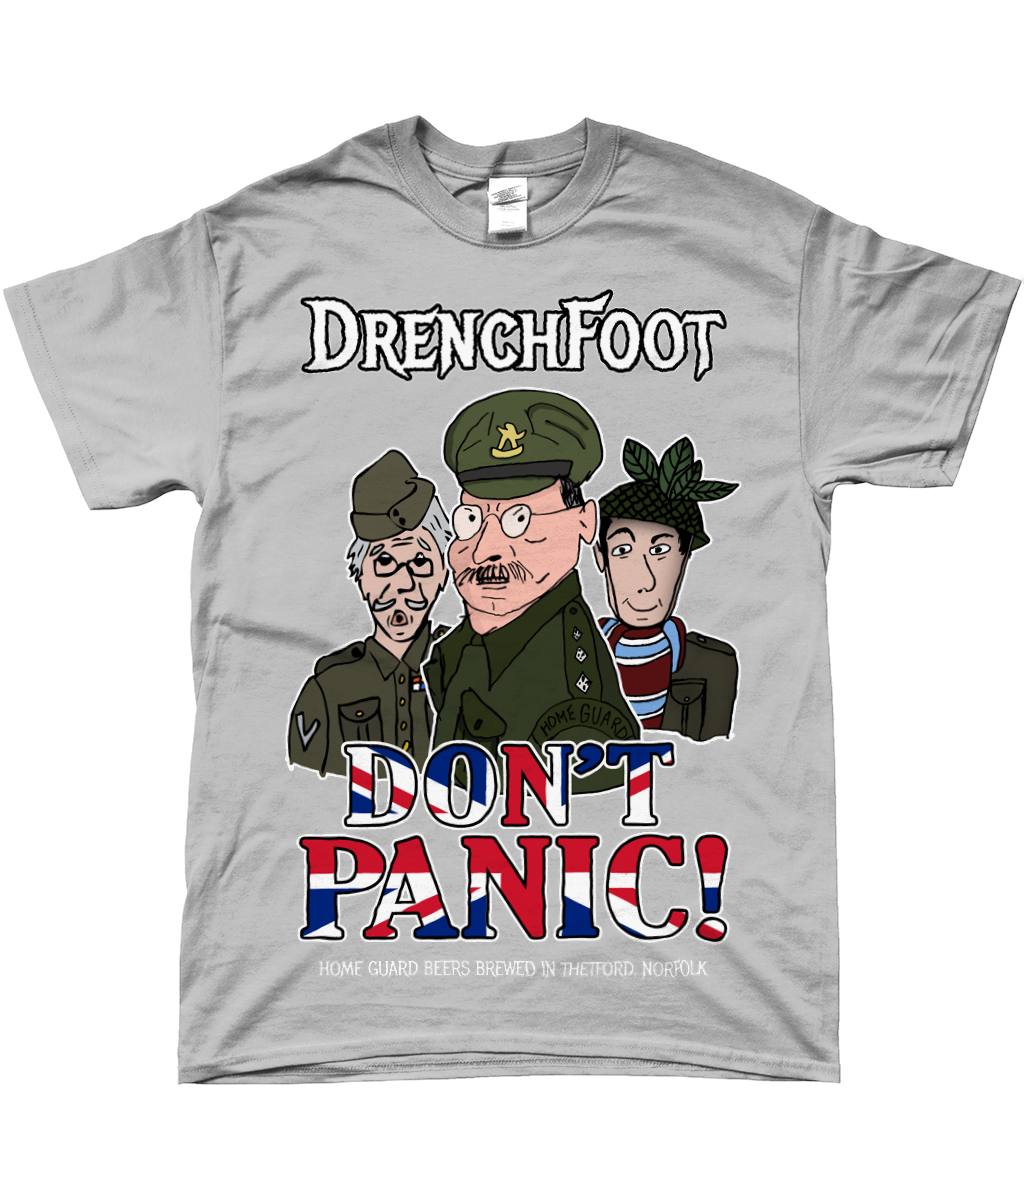 Drenchfoot Don't Panic! Tee Shirt